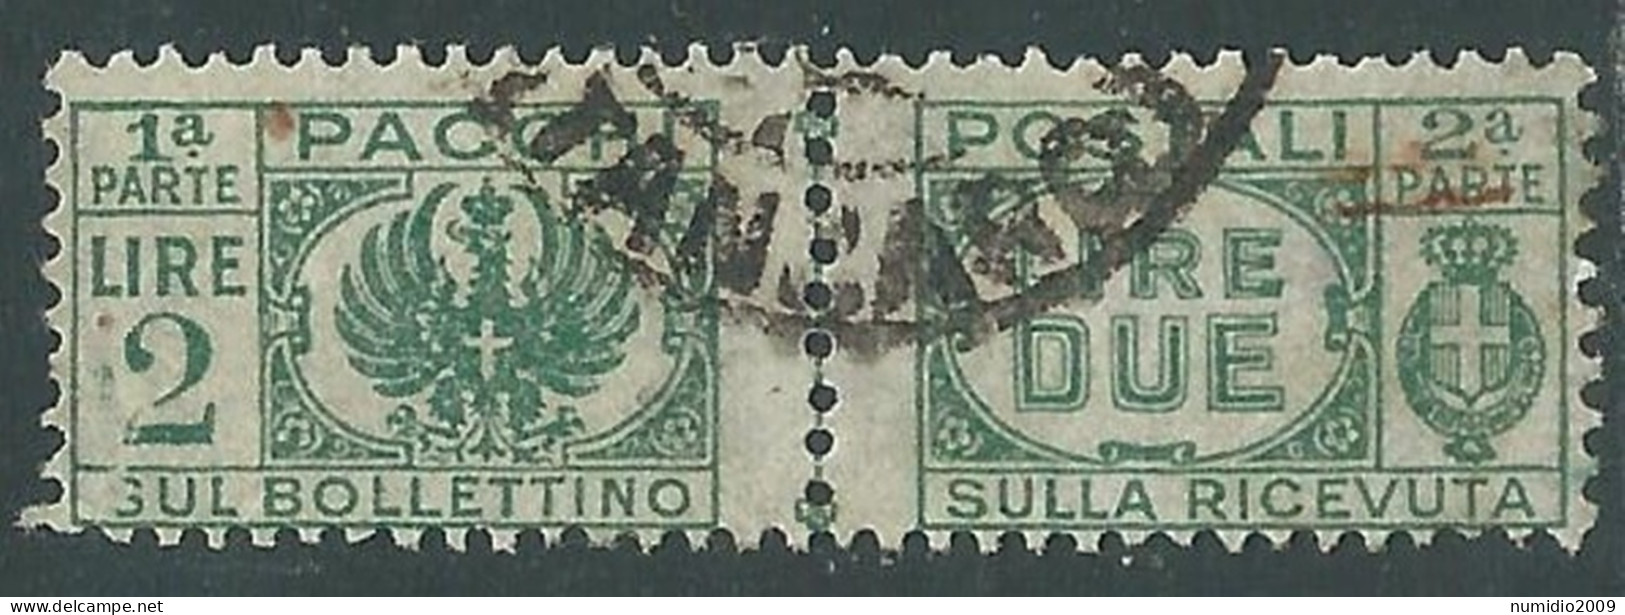 1946 LUOGOTENENZA PACCHI POSTALI USATO 2 LIRE - I18-9 - Colis-postaux